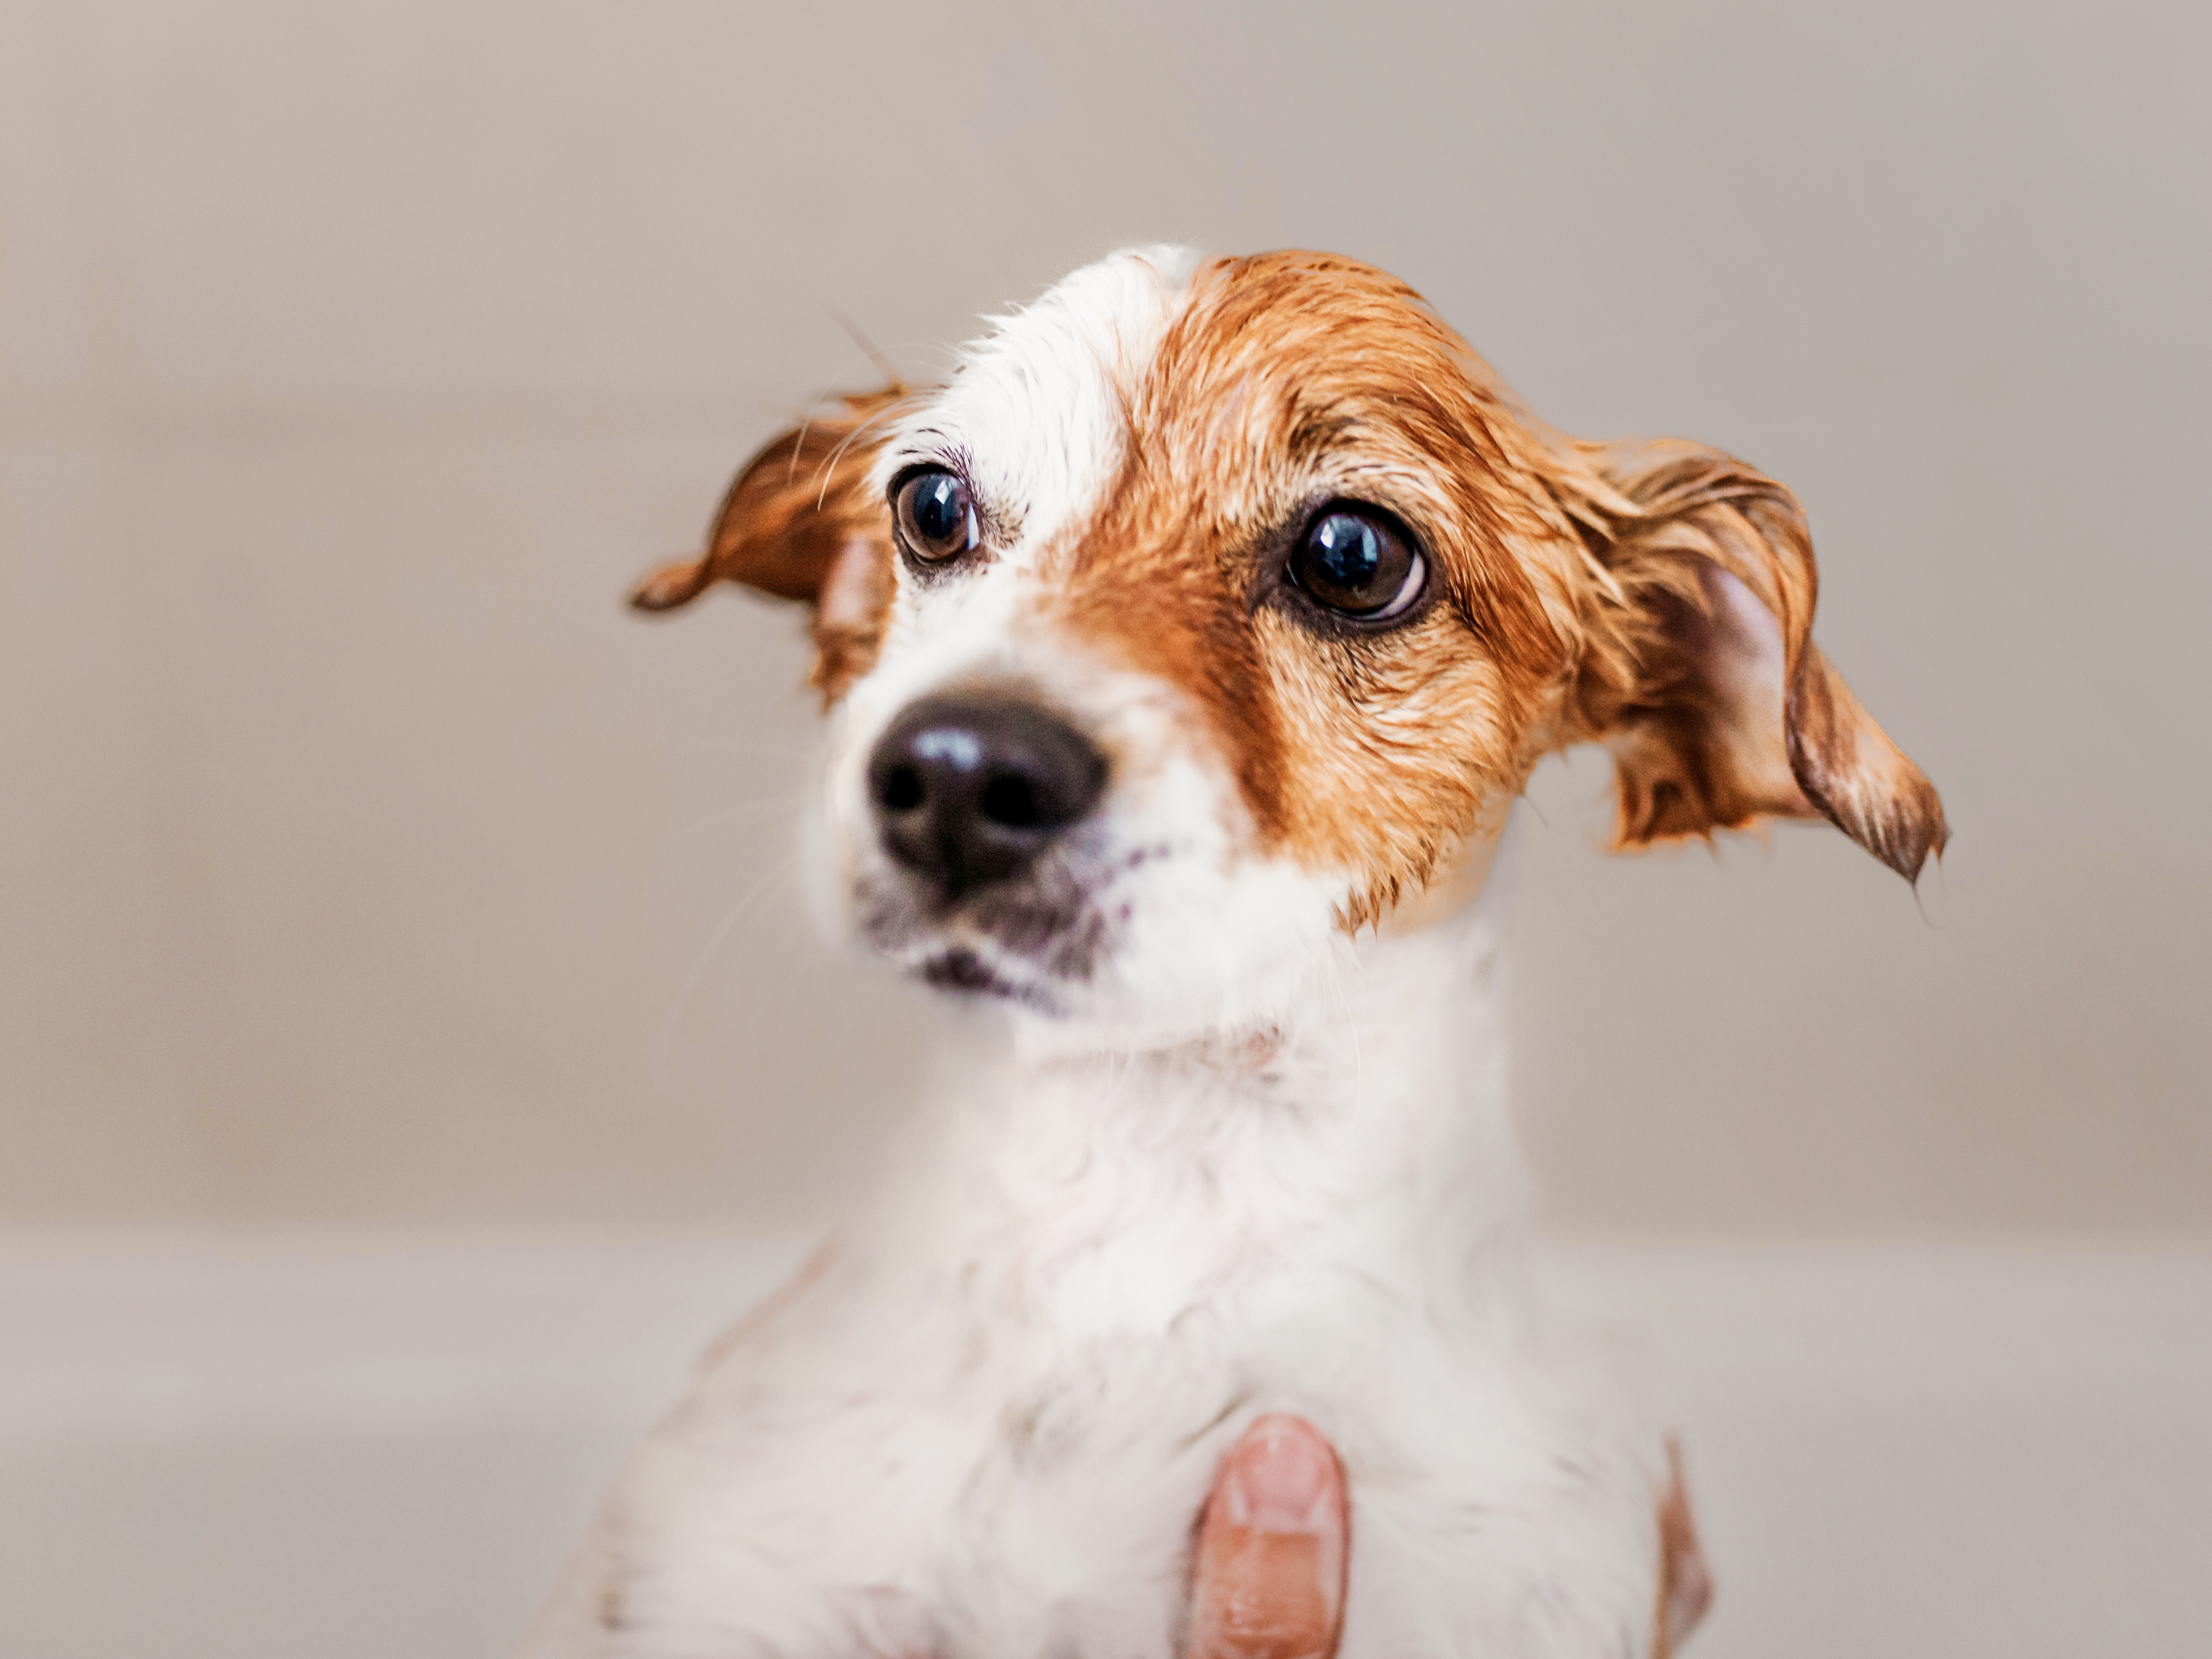 Jack Russell Terrier puppy having a bath